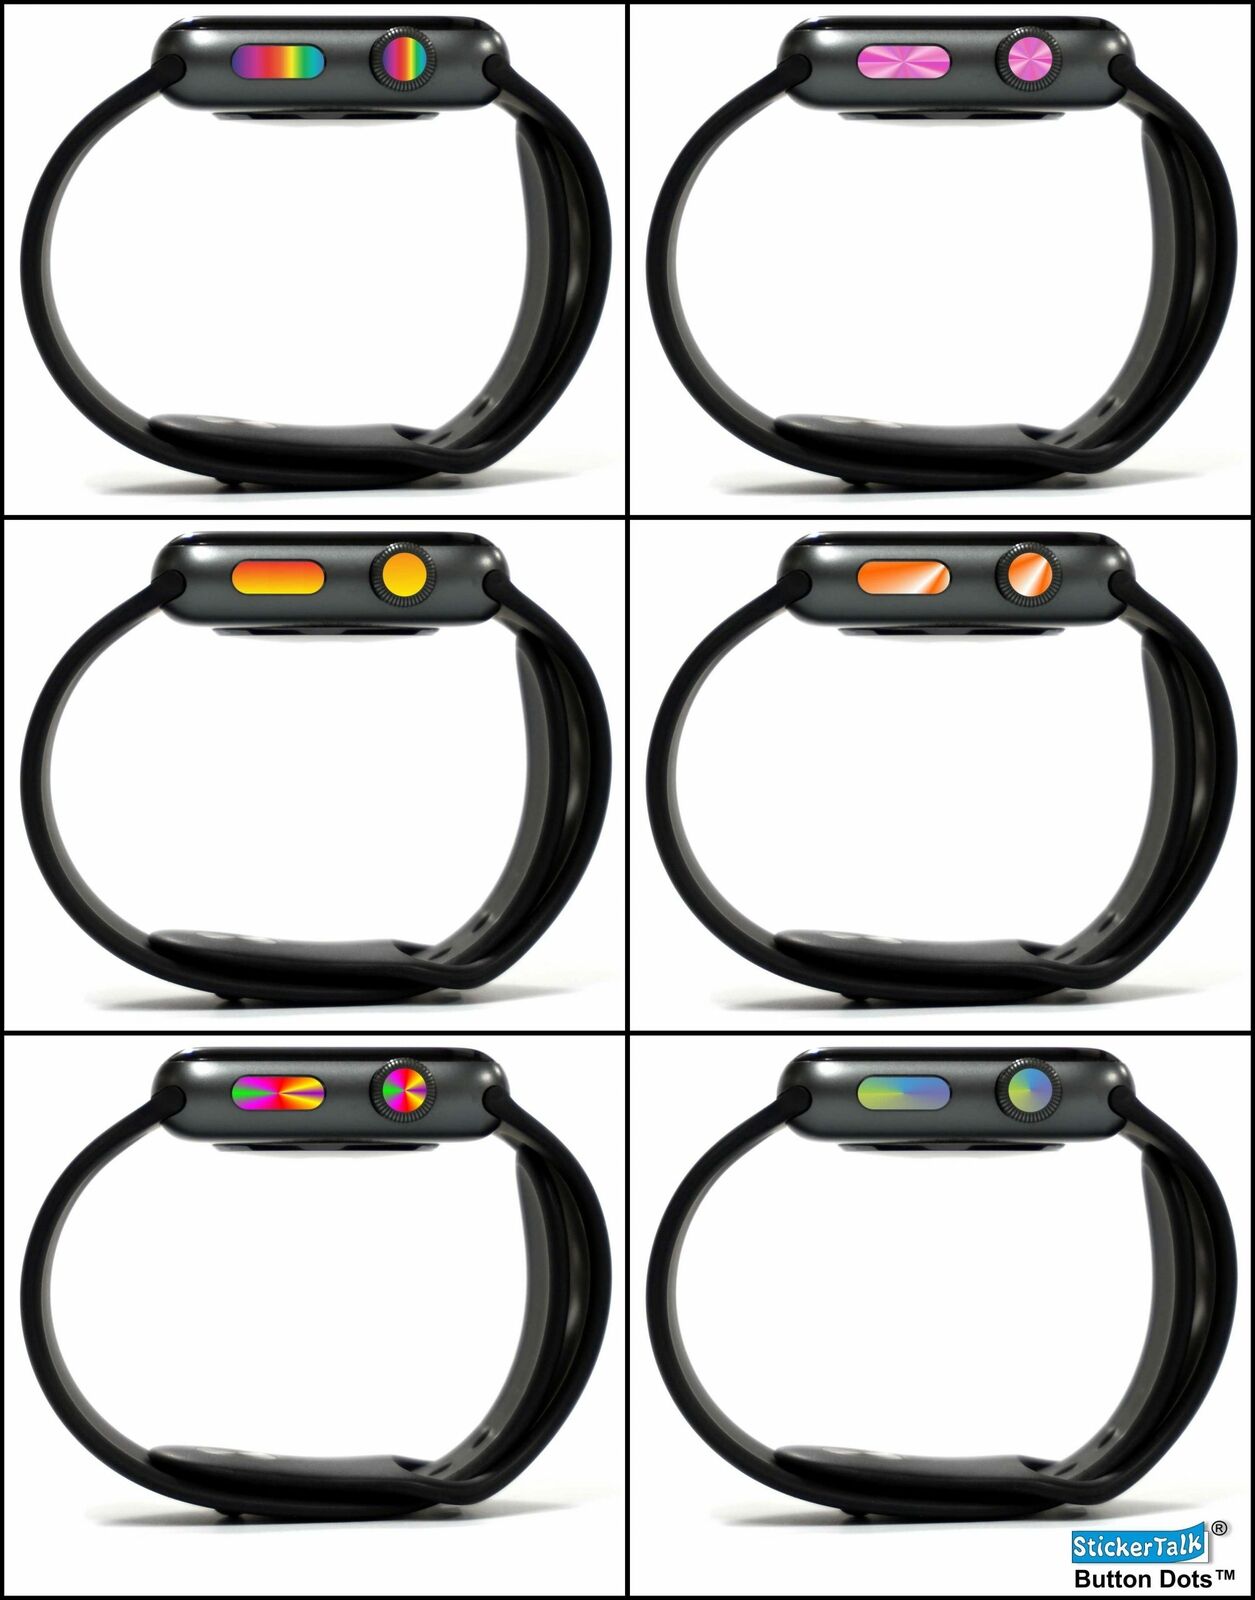 StickerTalk® Brand [24x] Colorful Apple Watch Crown Button Dots™ Stickers